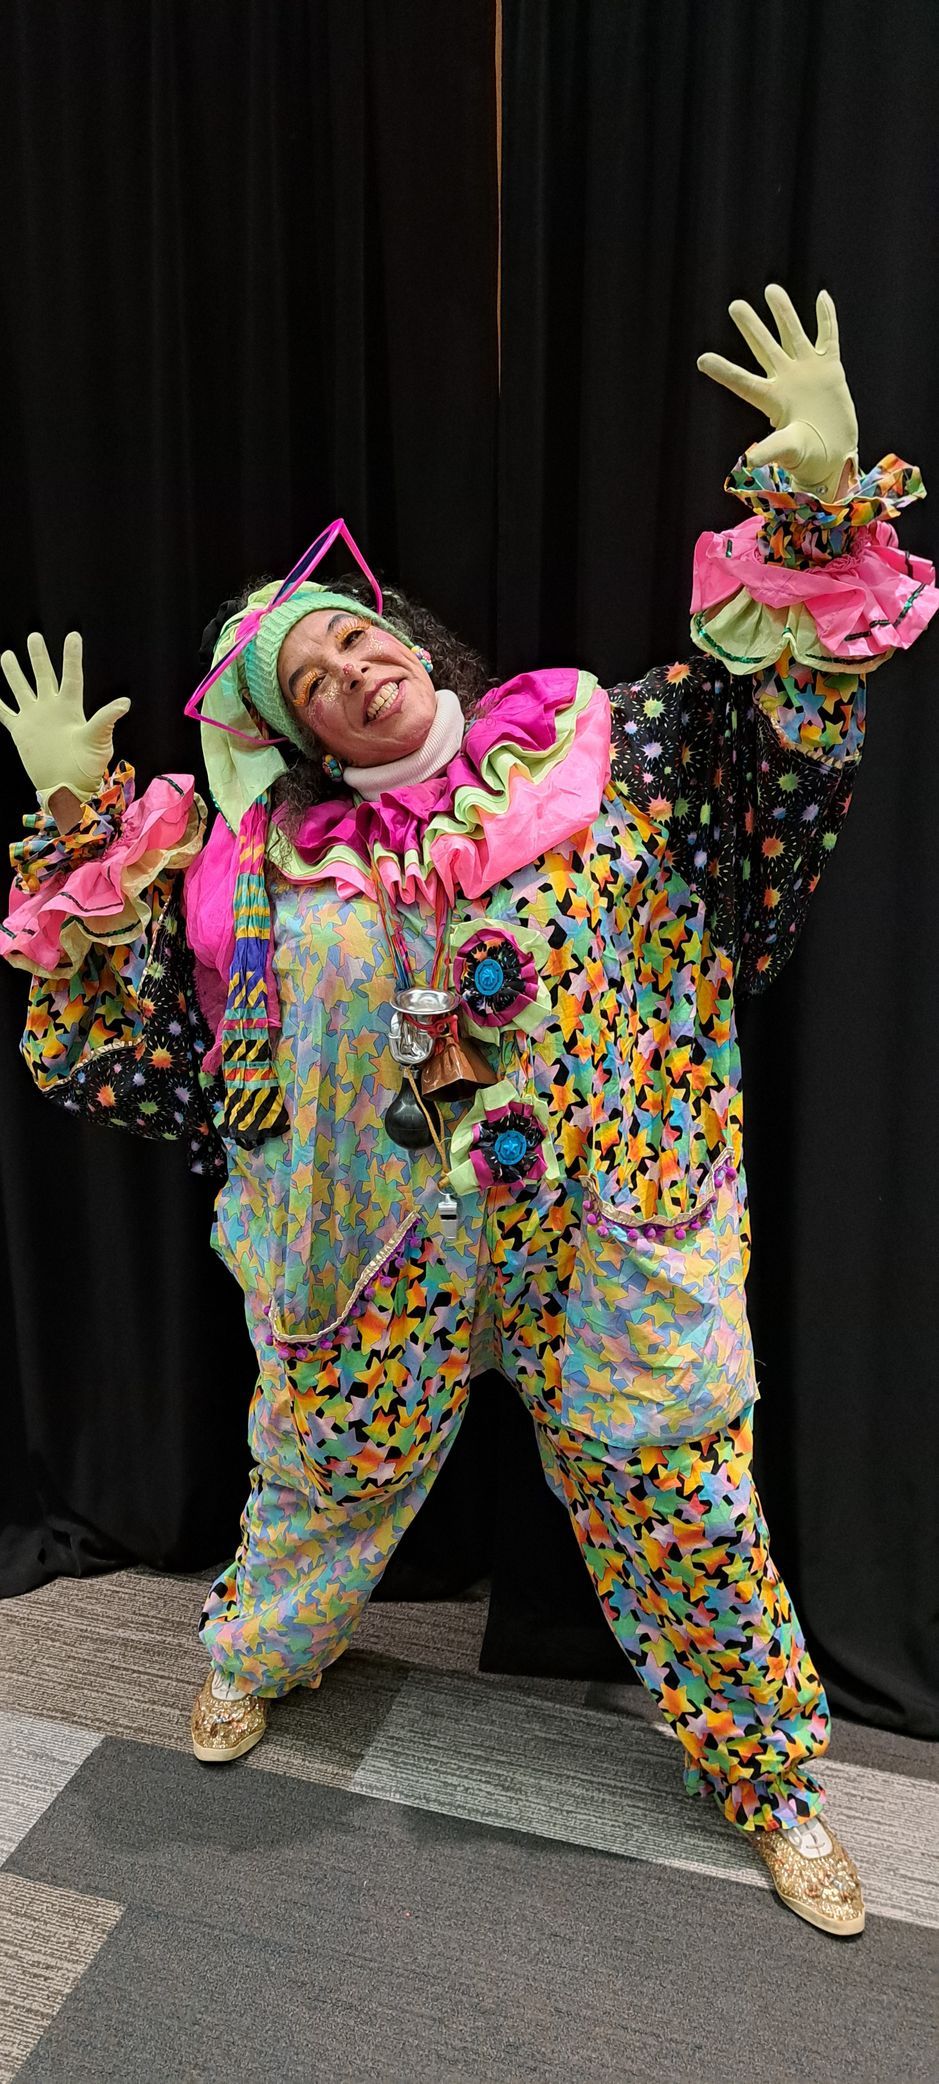 Clown performing at children's party in Calgary, Alberta